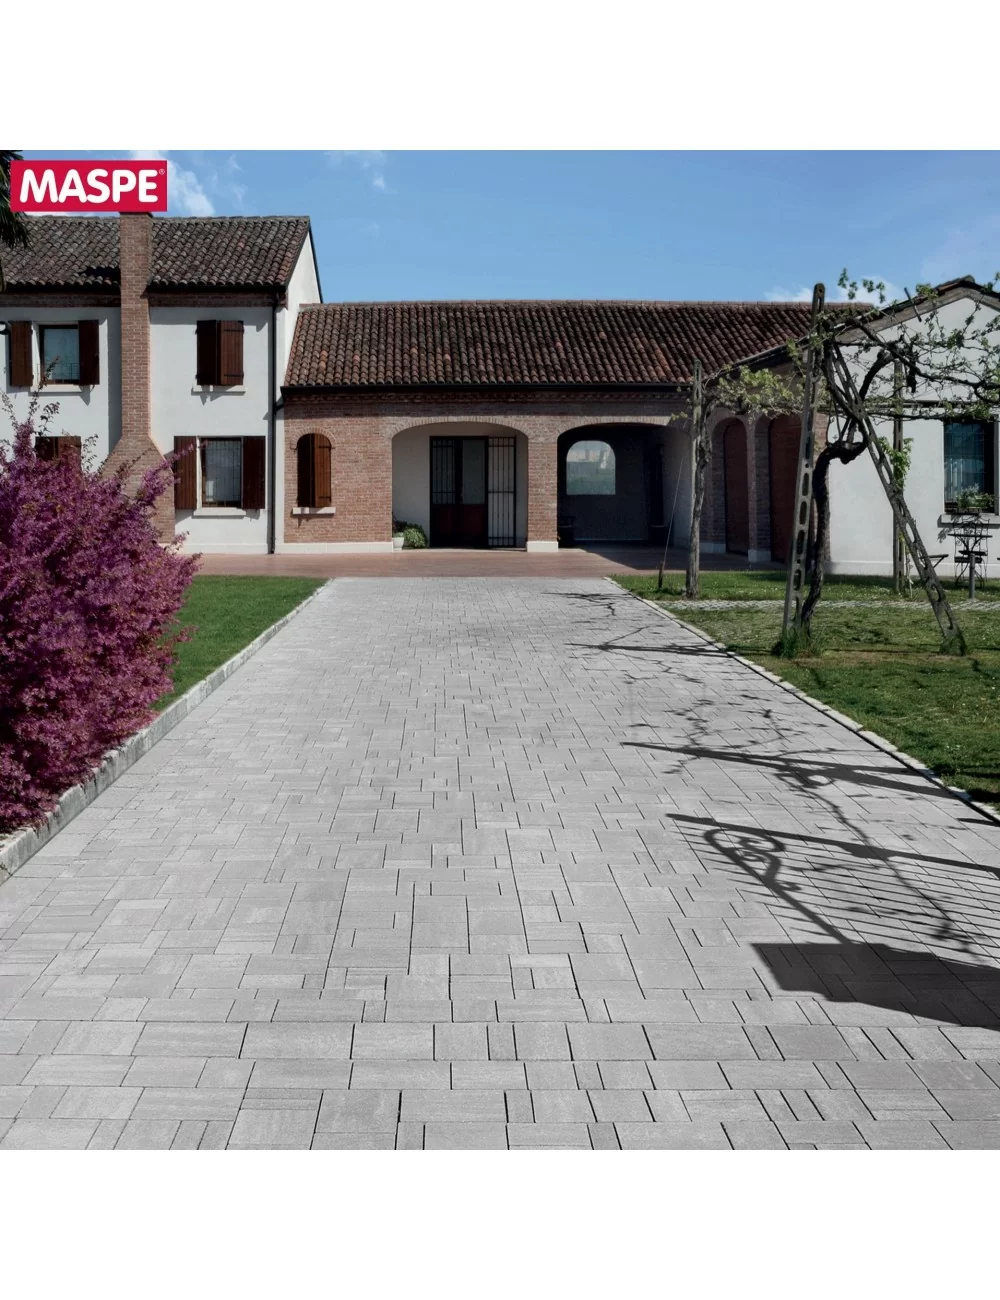 Maspe texxa outdoor paving tiles grey serizzo self-locking